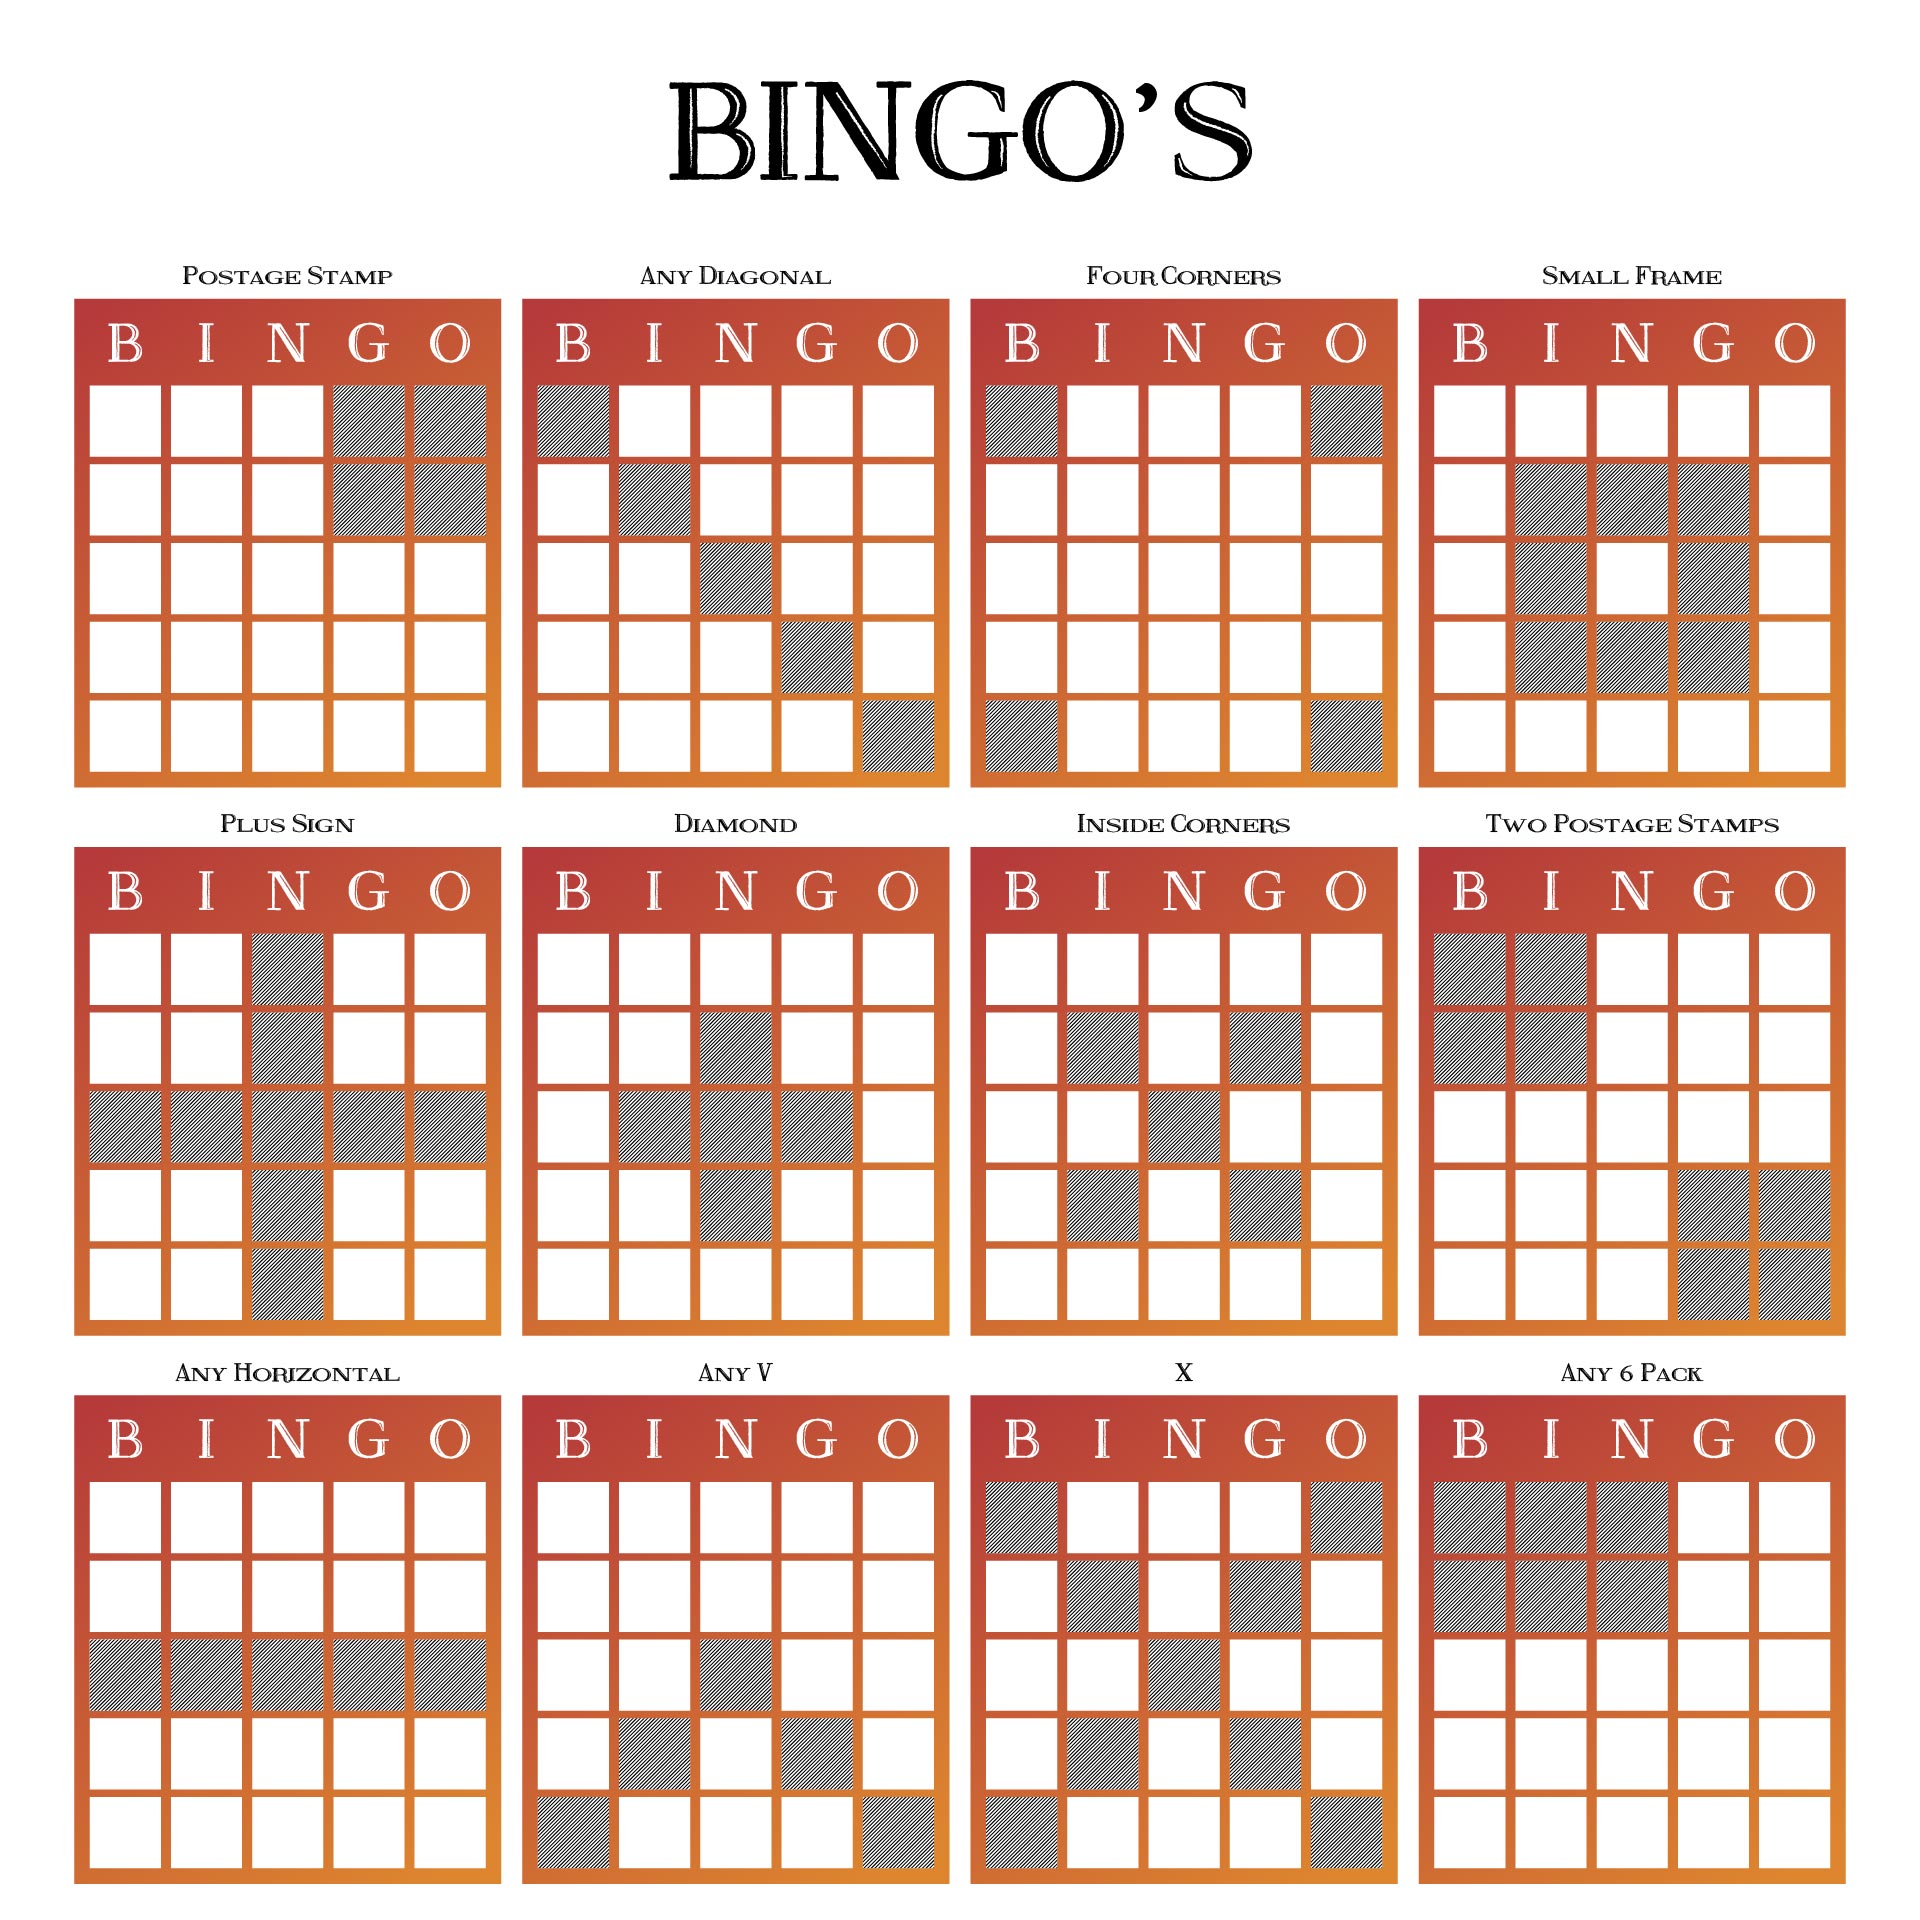 Different Bingo Games Different Variations Of Bingo Games